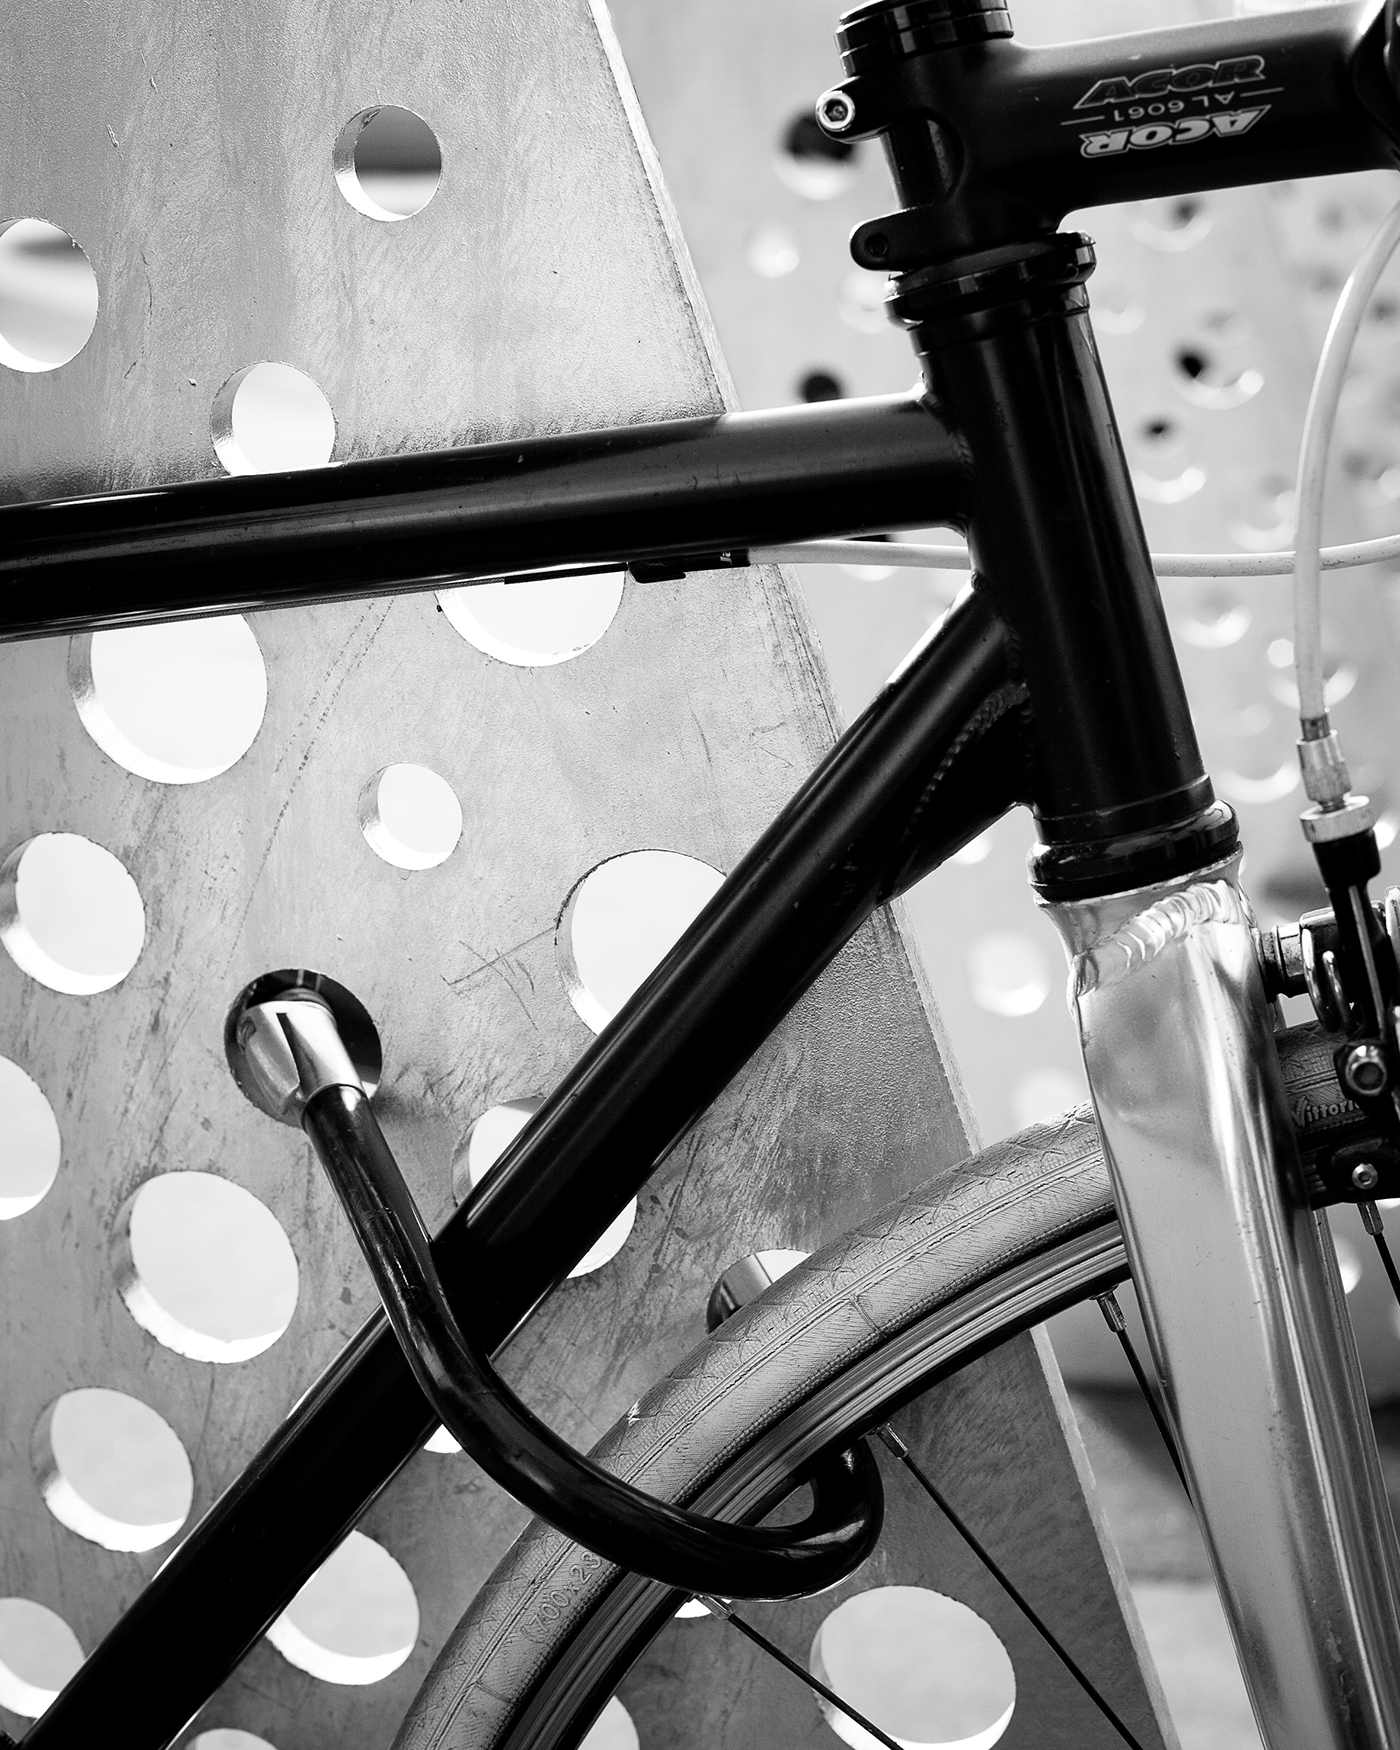 bikerack budapest Competition steel Bicycle World Heritage Site comfort KUNSTHALLE Urban Design public furniture